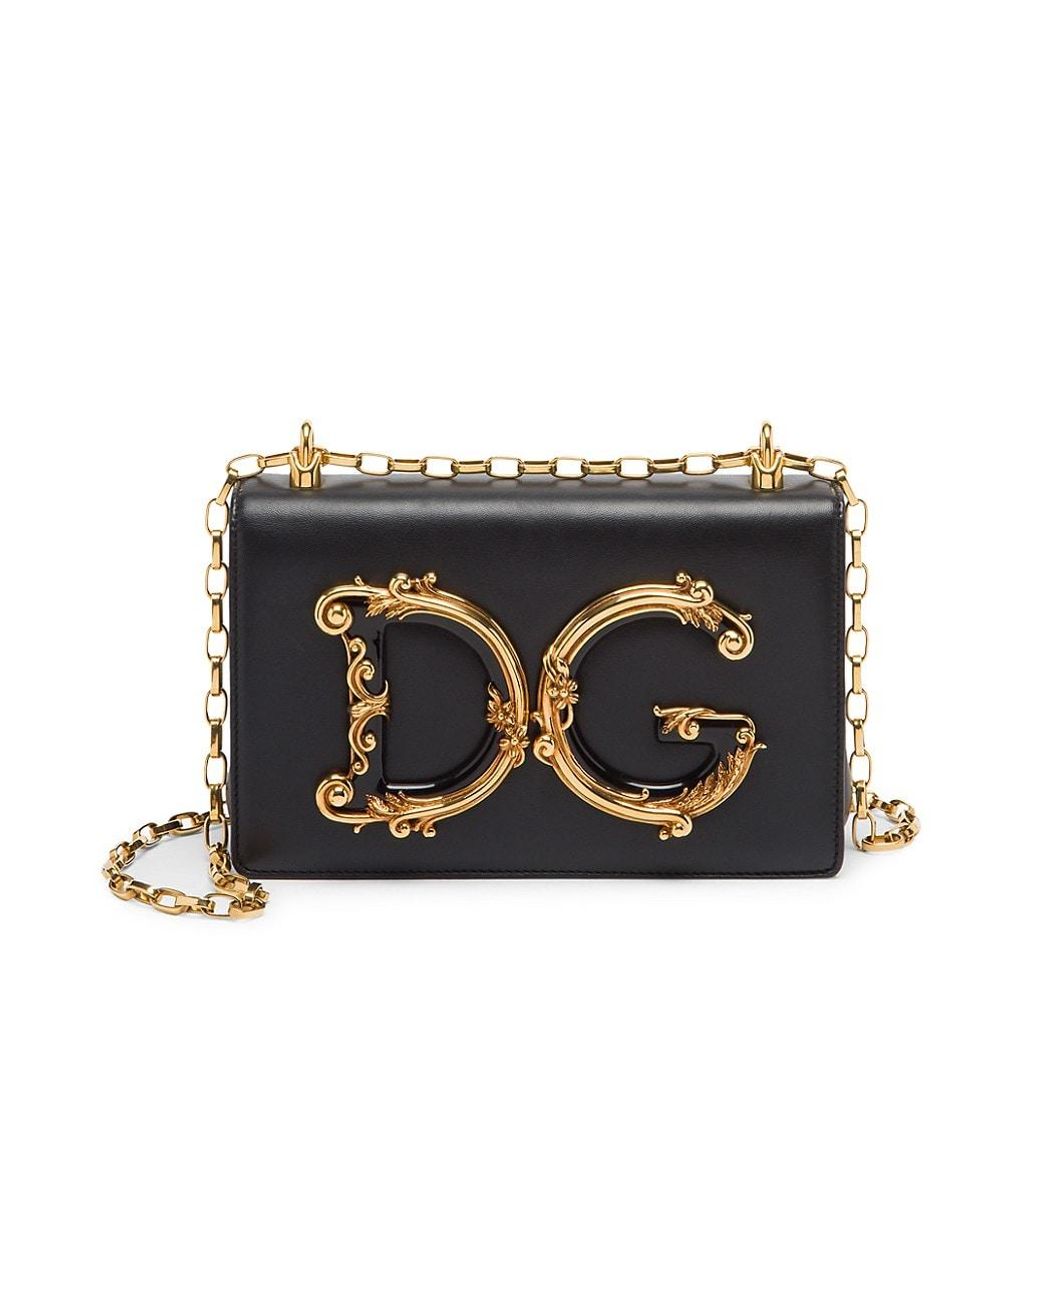 Dolce & Gabbana D & G Girls Leather Shoulder Bag in Nero (Black) - Lyst